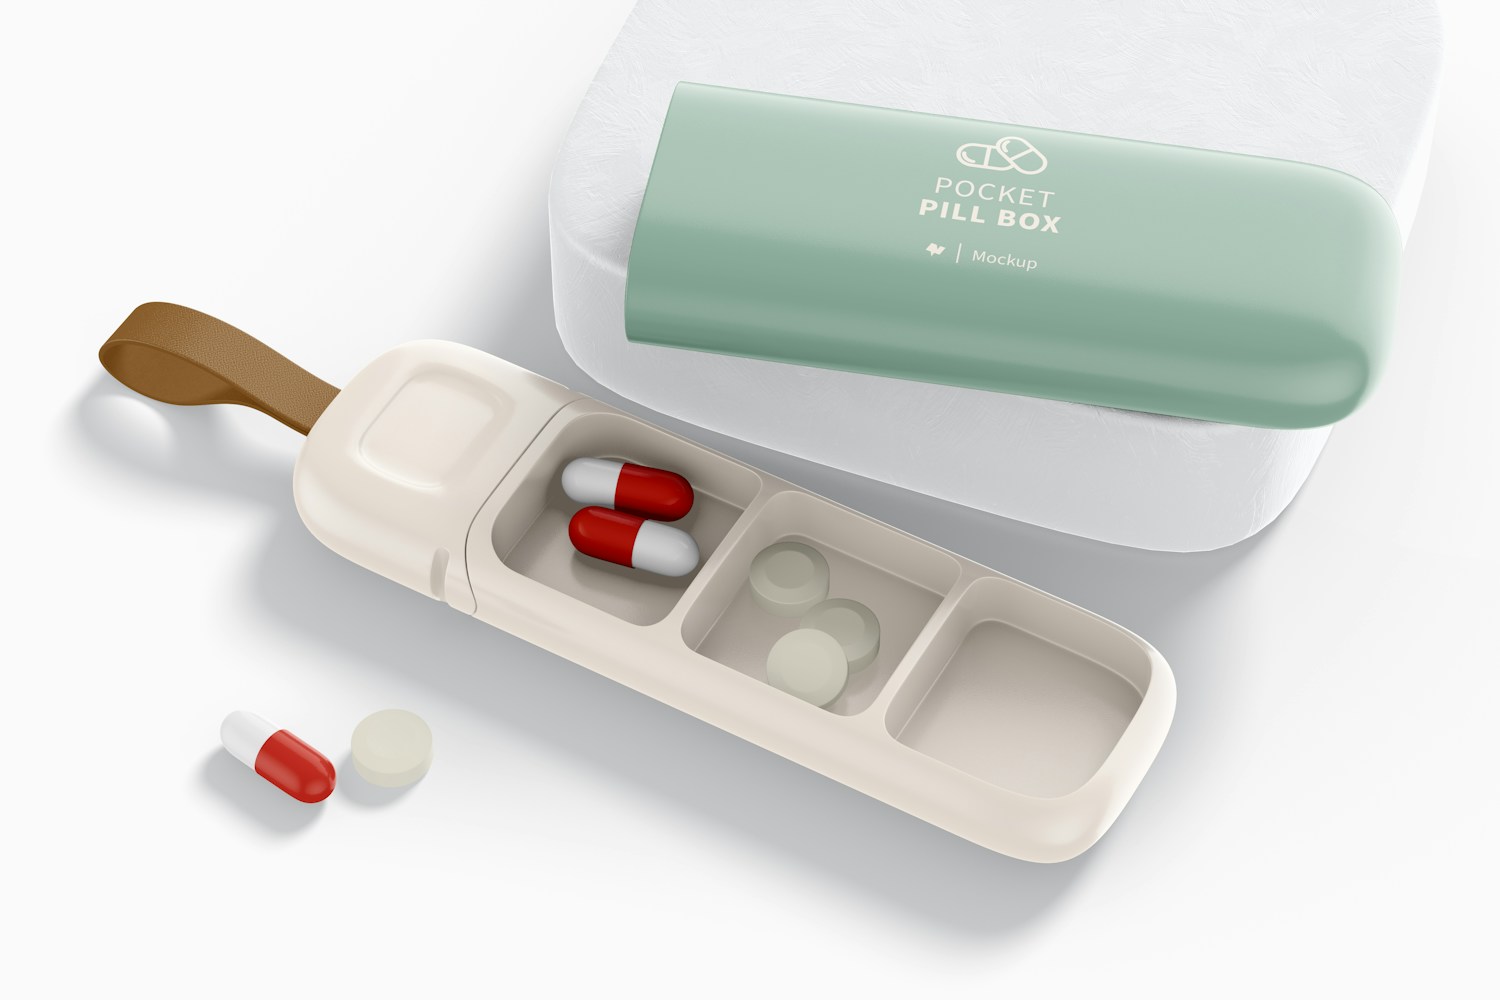 Pocket Pill Box Mockup, Perspective